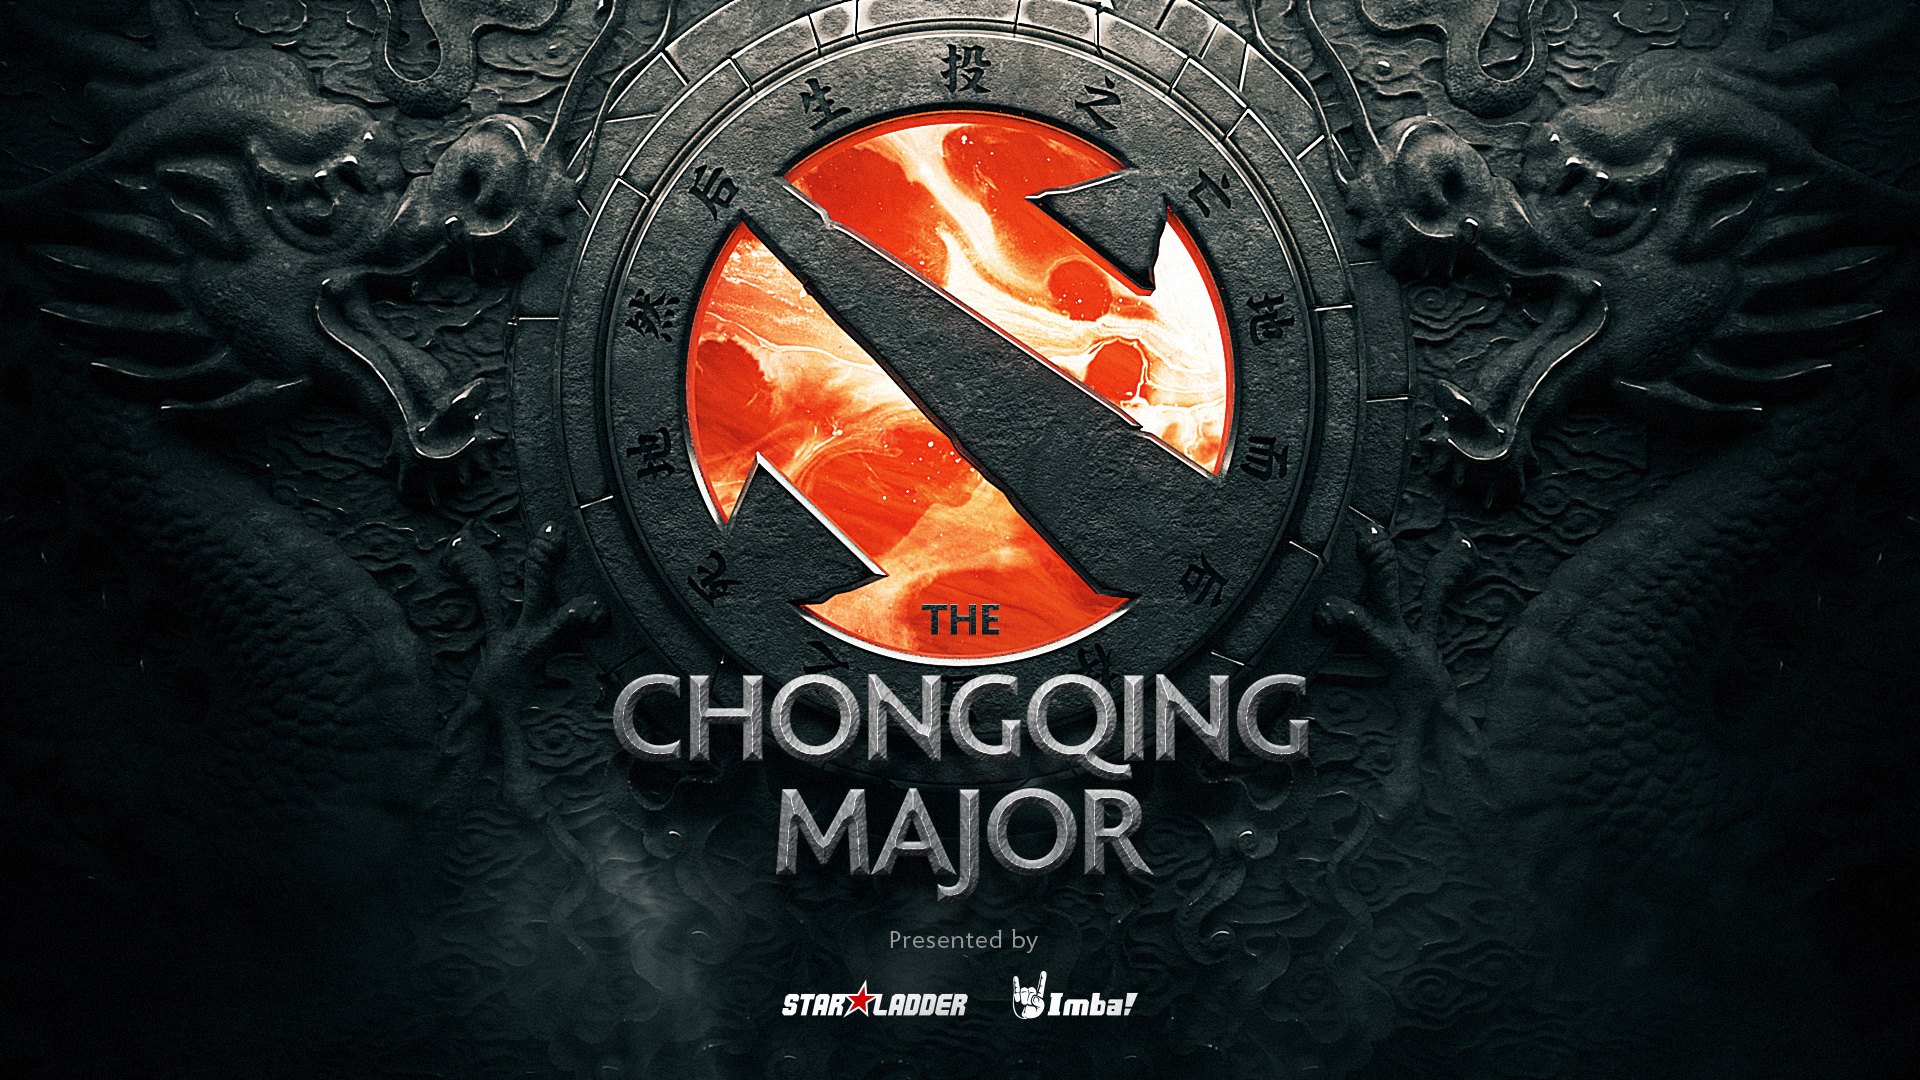 Equipos del Major de Chongqing